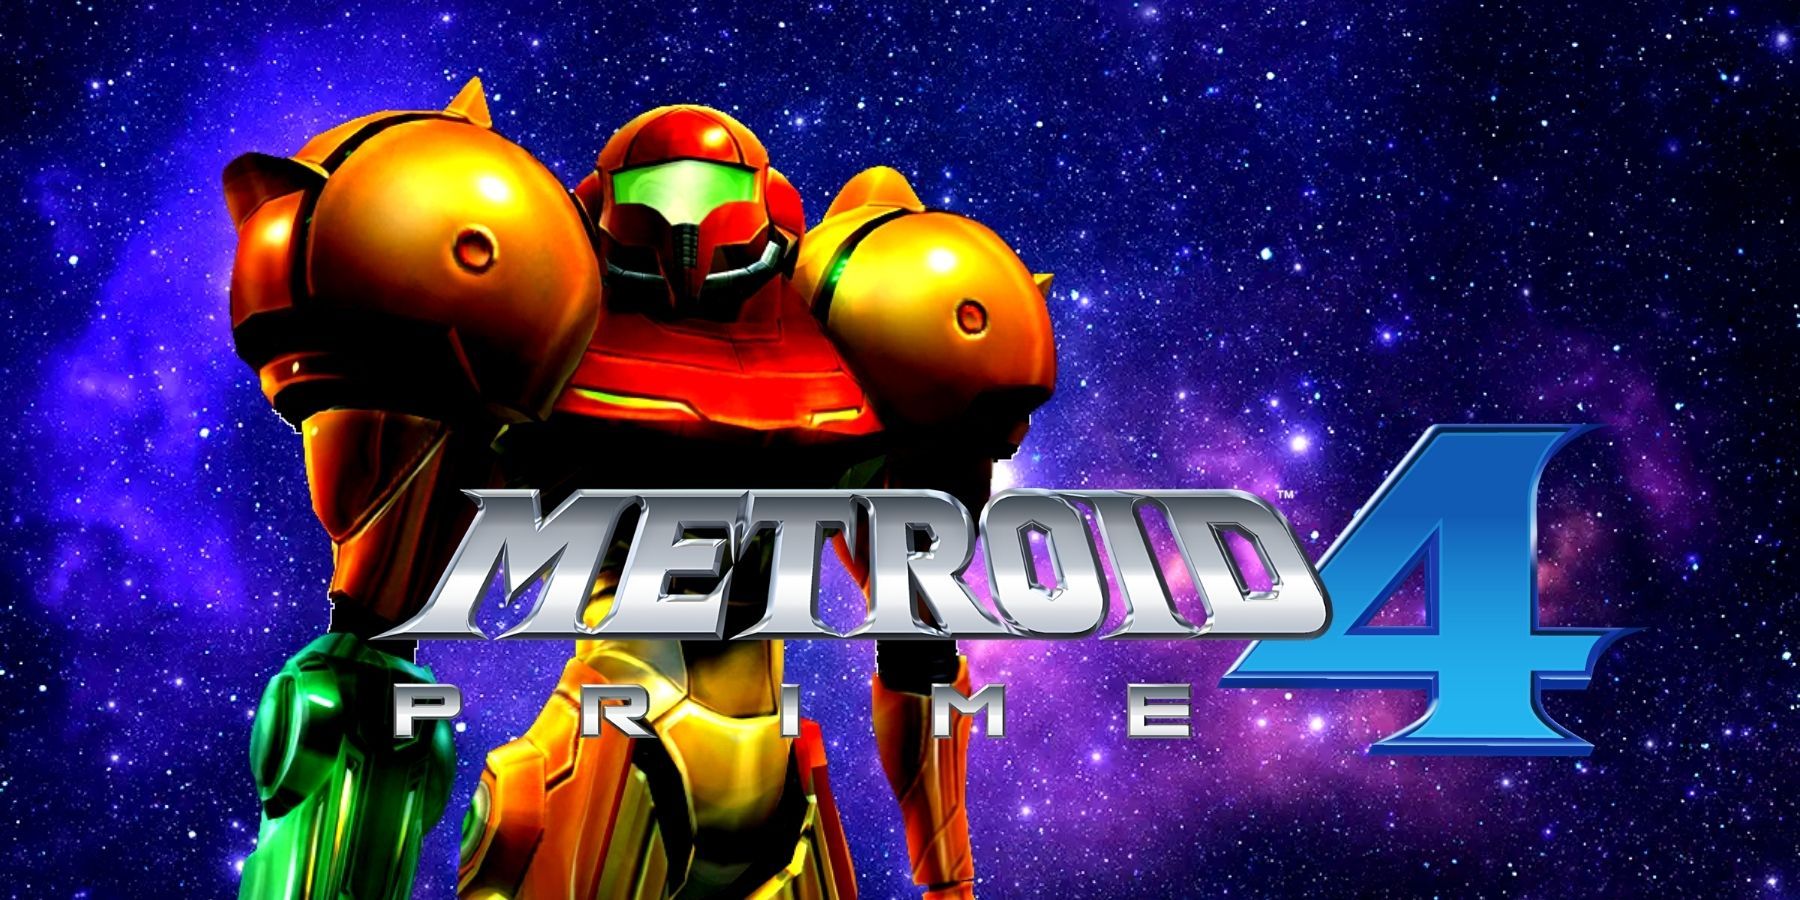 Nintendo metroid. Nintendo unveils, releases Metroid Prime Remastered game on Switch.